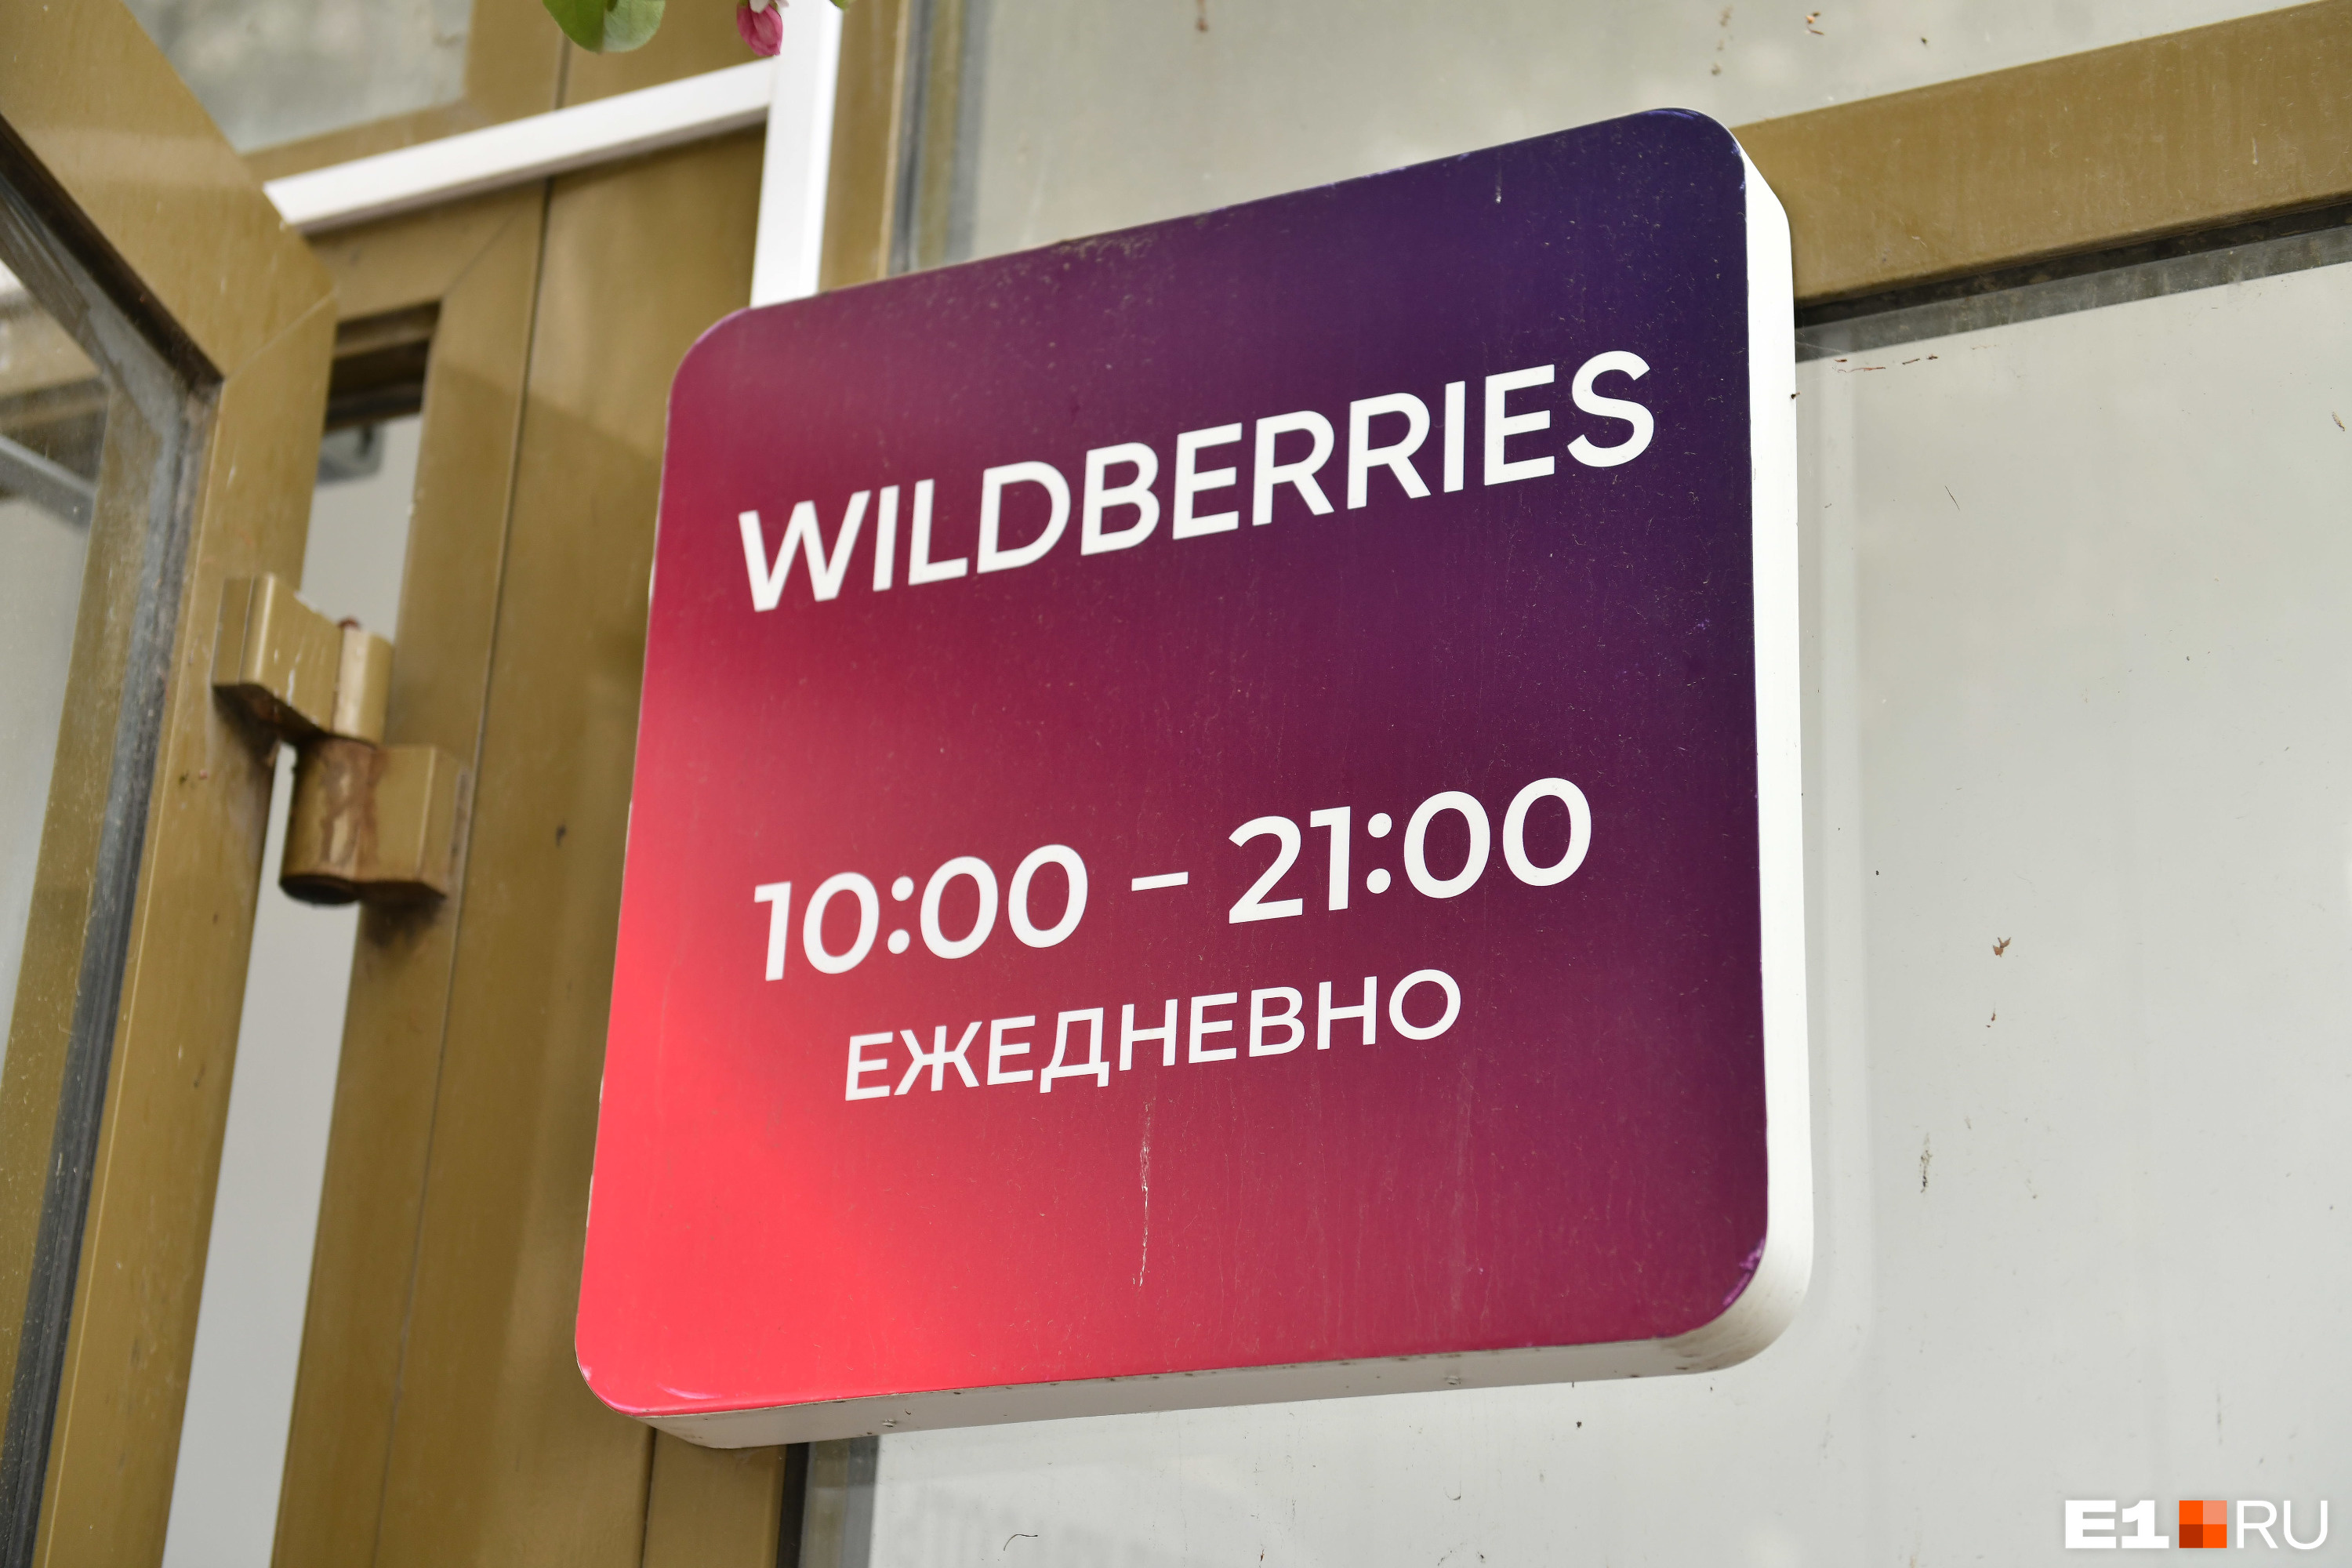 Wildberries потерял заказ екатеринбурженки. И оштрафовал... ее саму